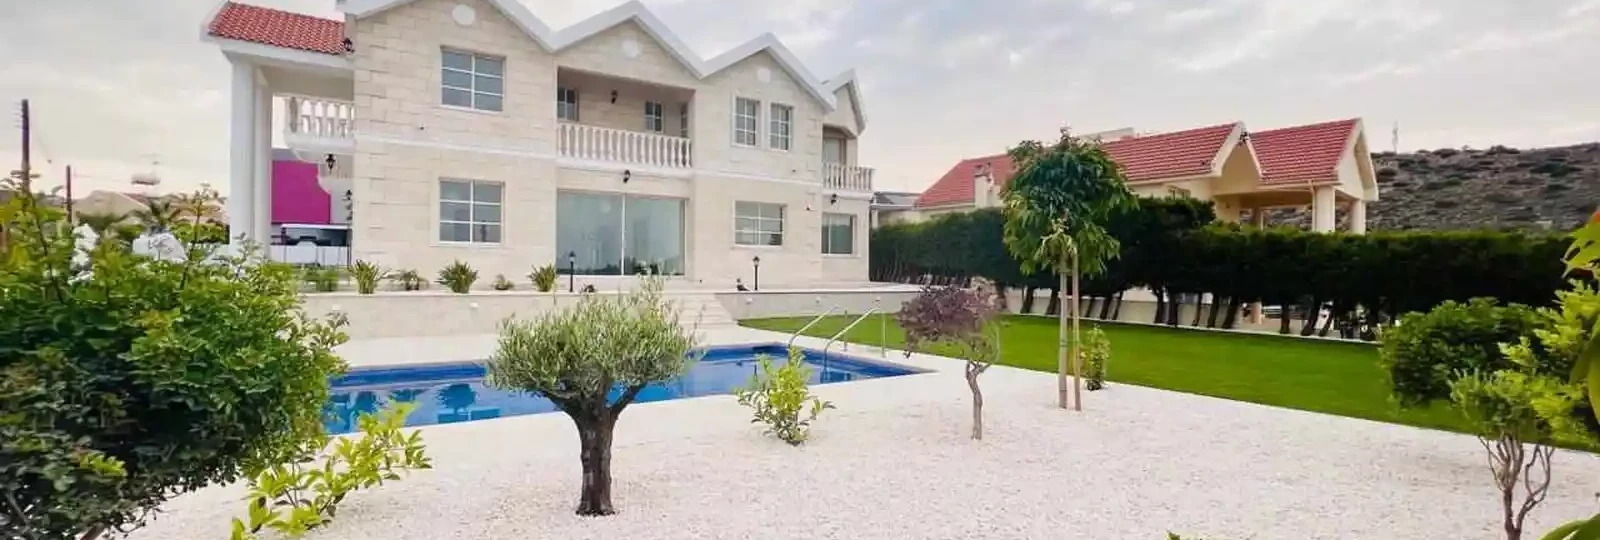 5-bedroom villa fоr sаle €1.200.000, image 1